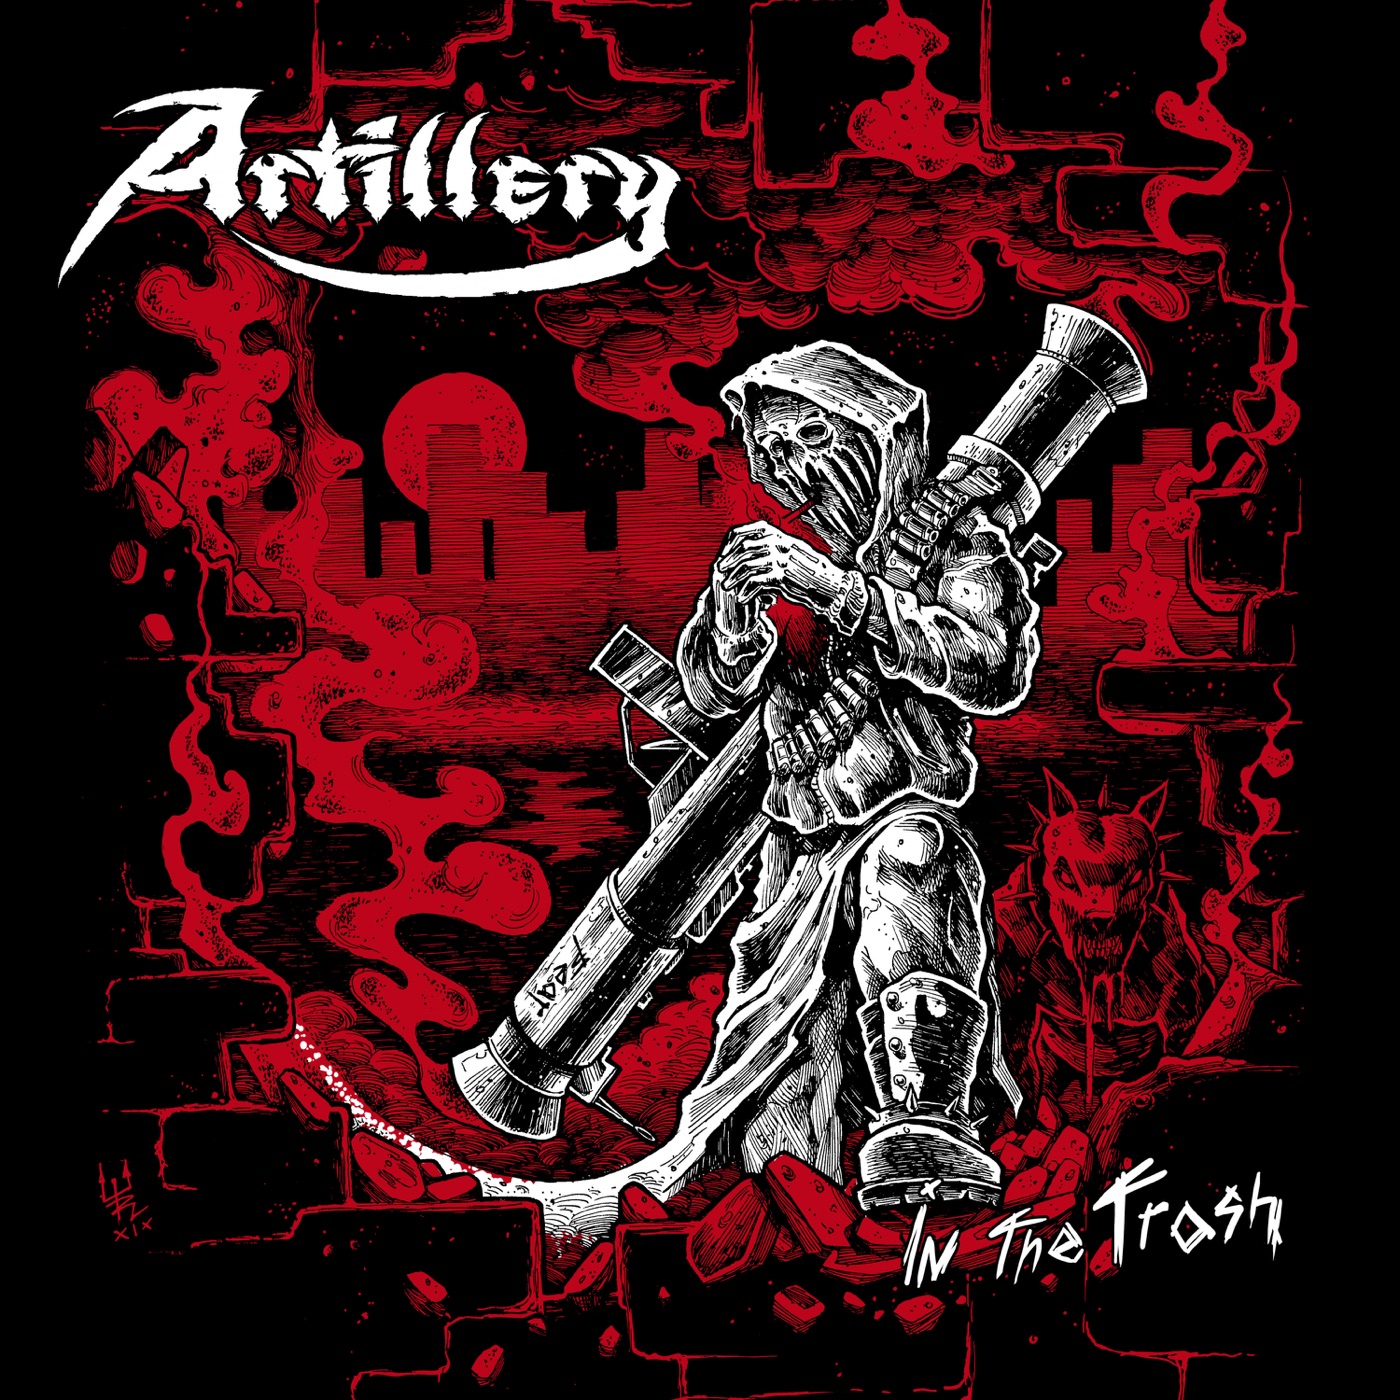 Artillery - In the Trash (2019)